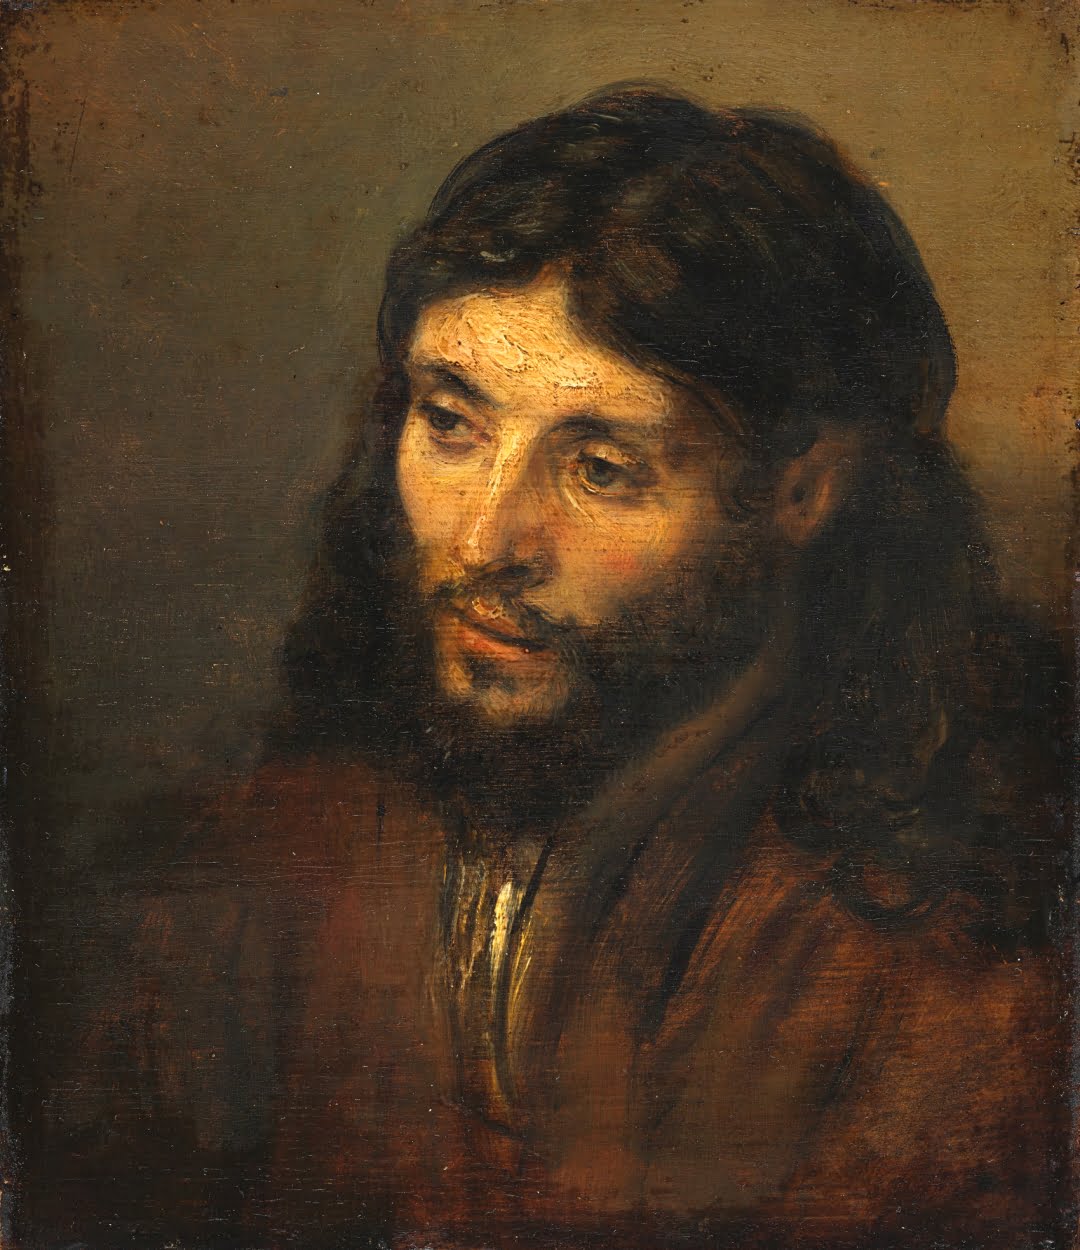 Chân dung Chúa Giêsu. Rembrandt. 1640. Gemäldegalerie Berlin.